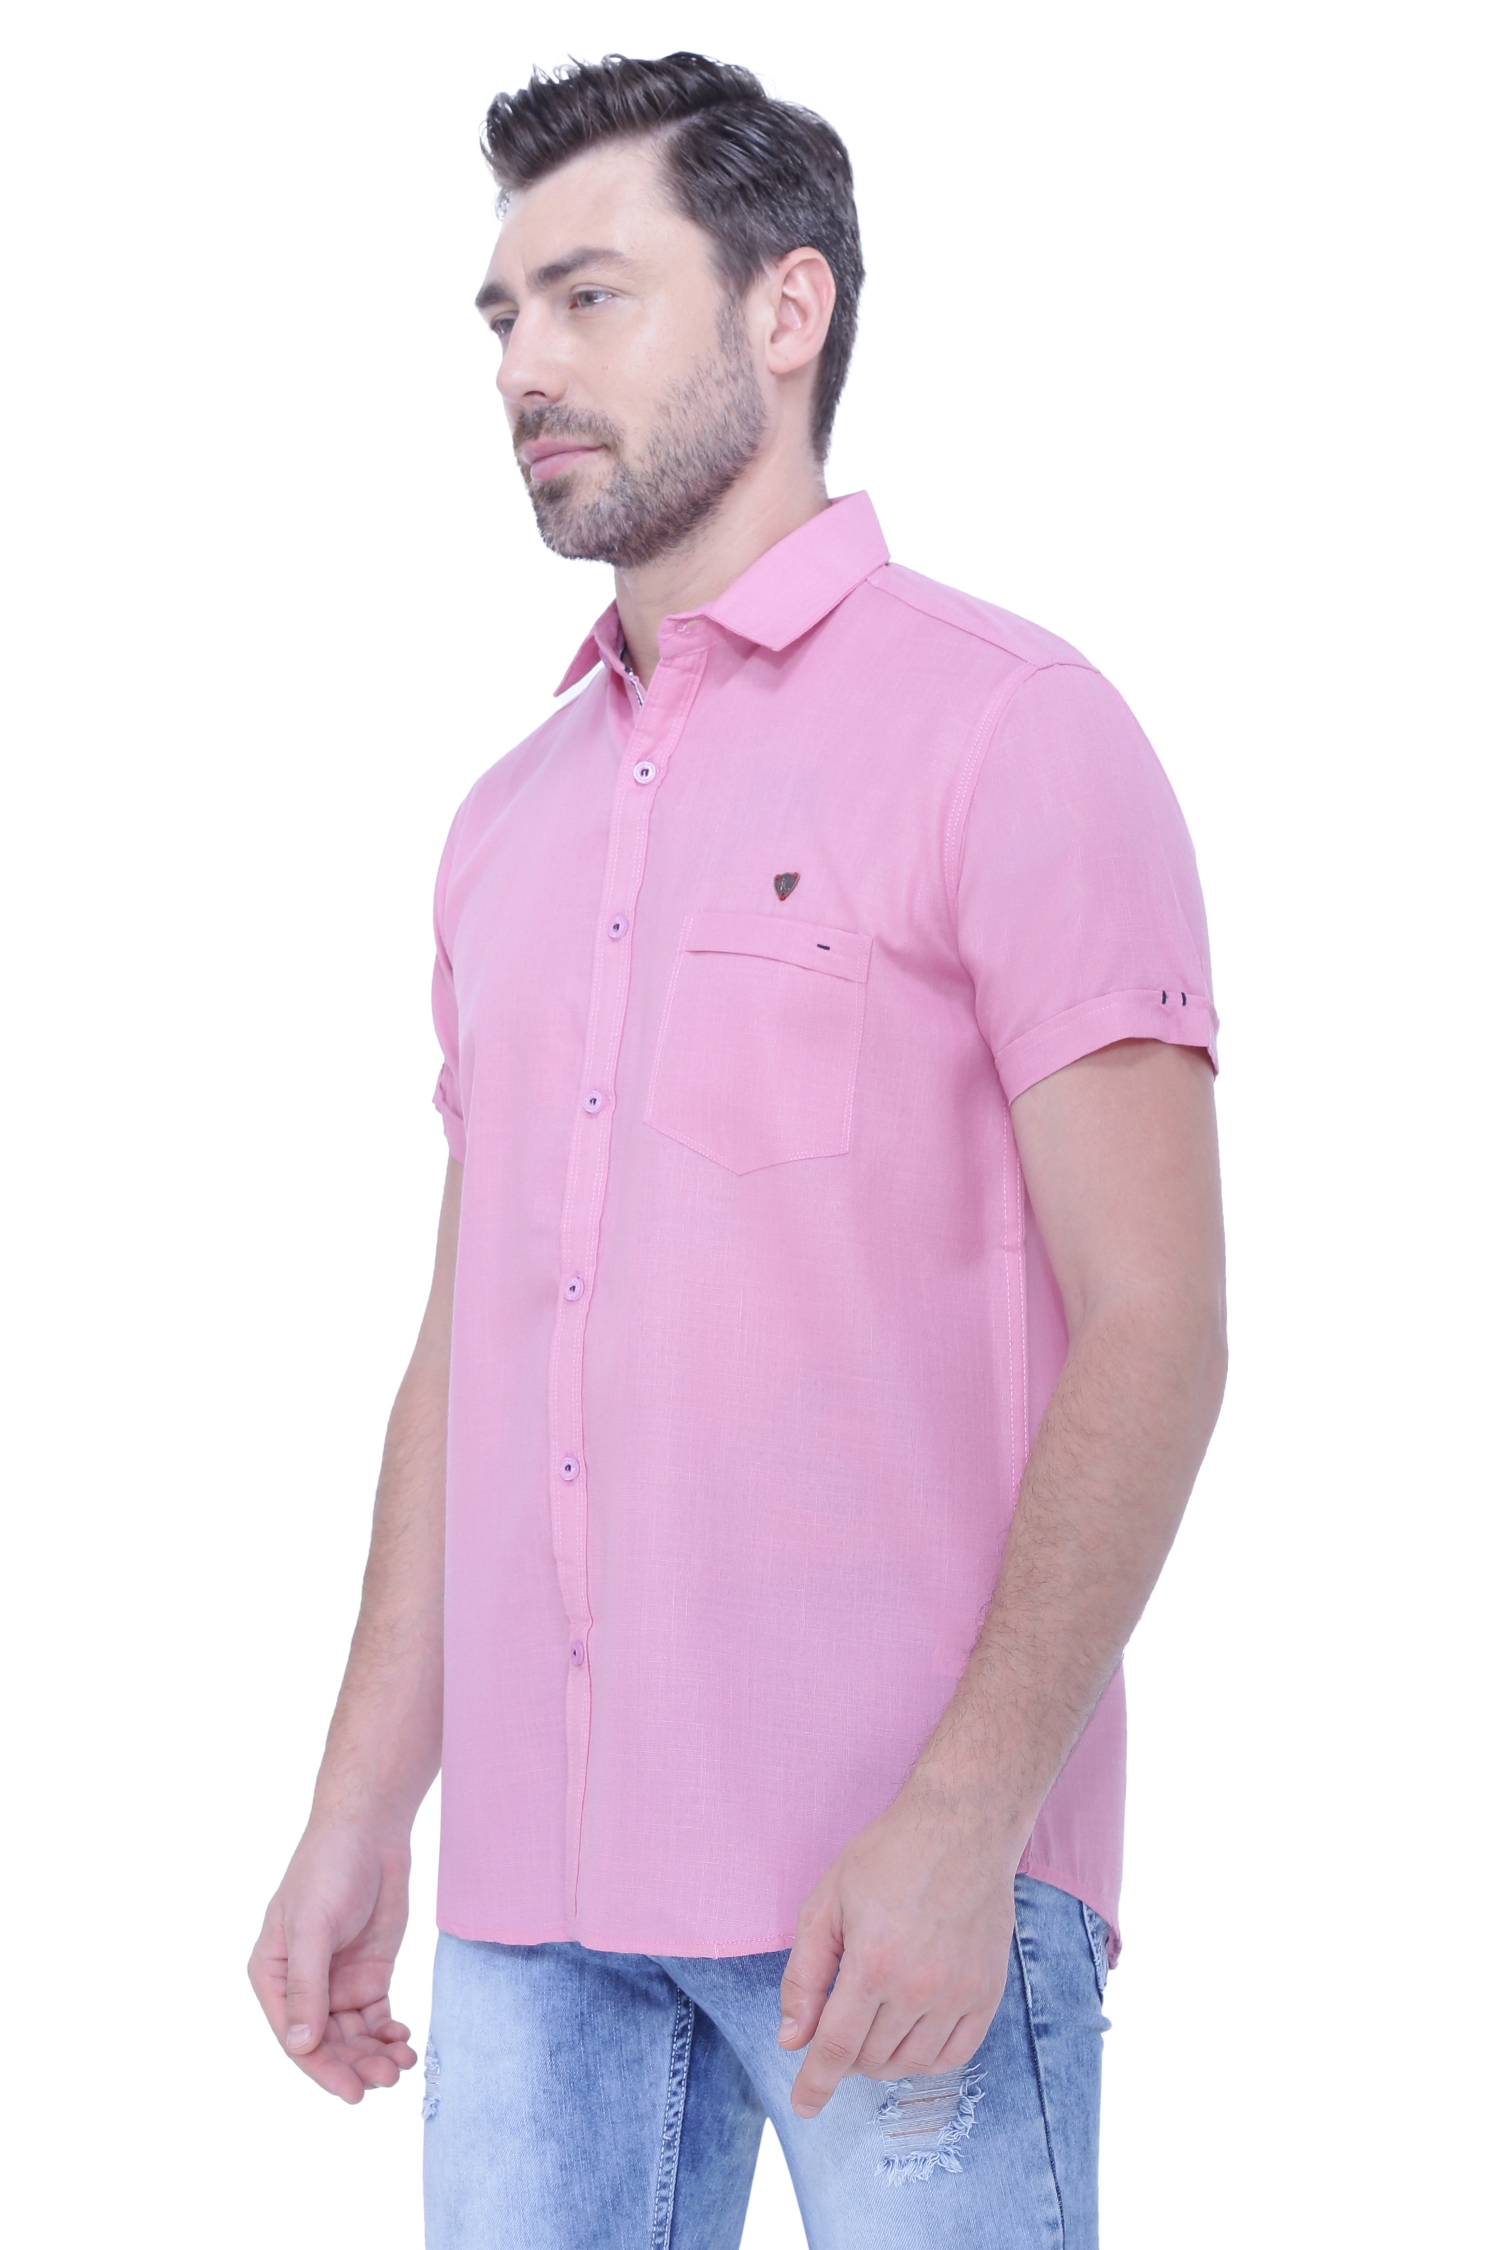 Kuons Avenue | Kuons Avenue Men's Linen Blend Half Sleeves Casual Shirt-KACLHS1232 1